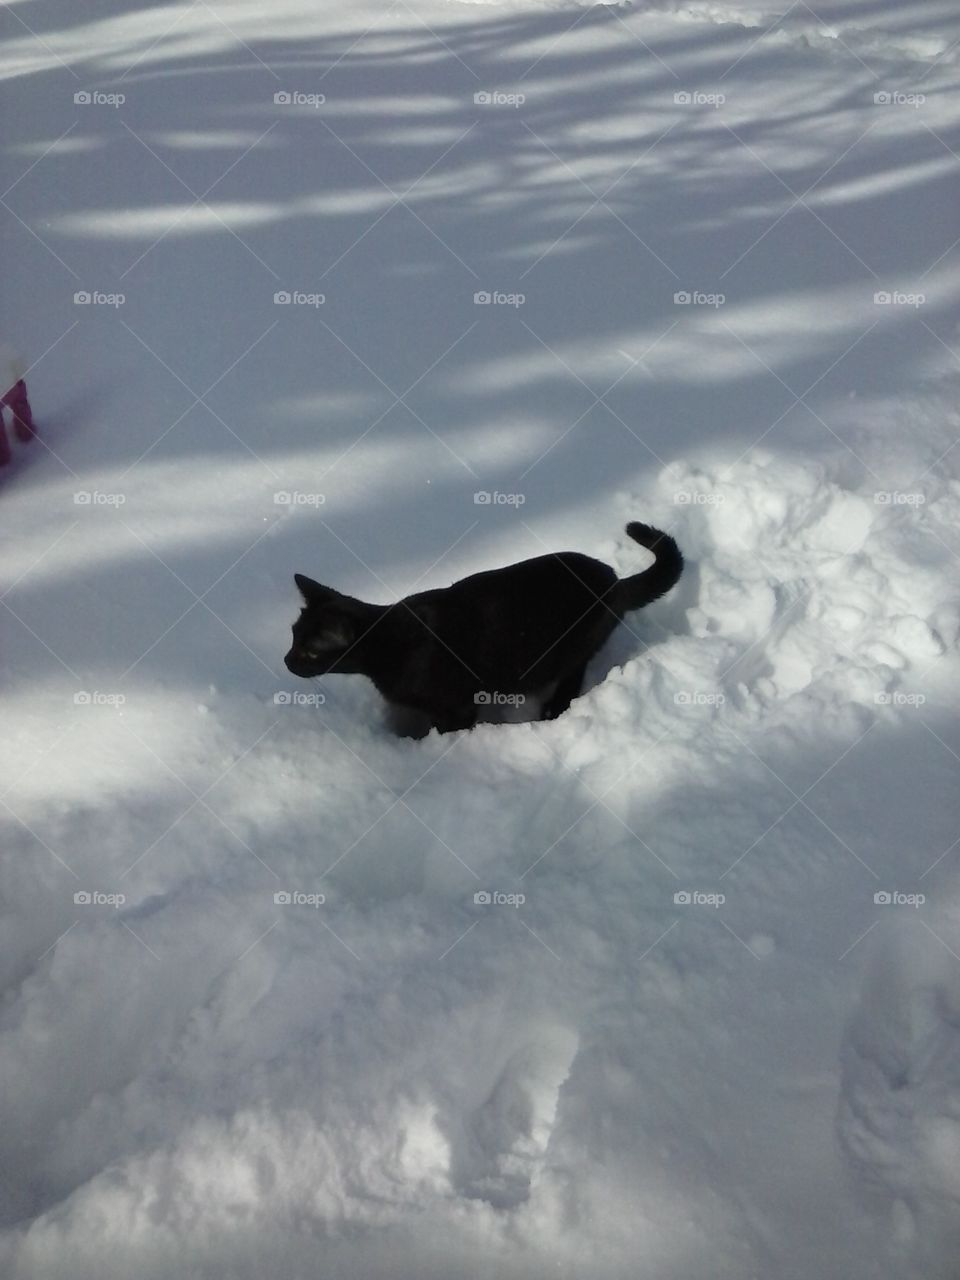 now what. black cat stuck I'm snow